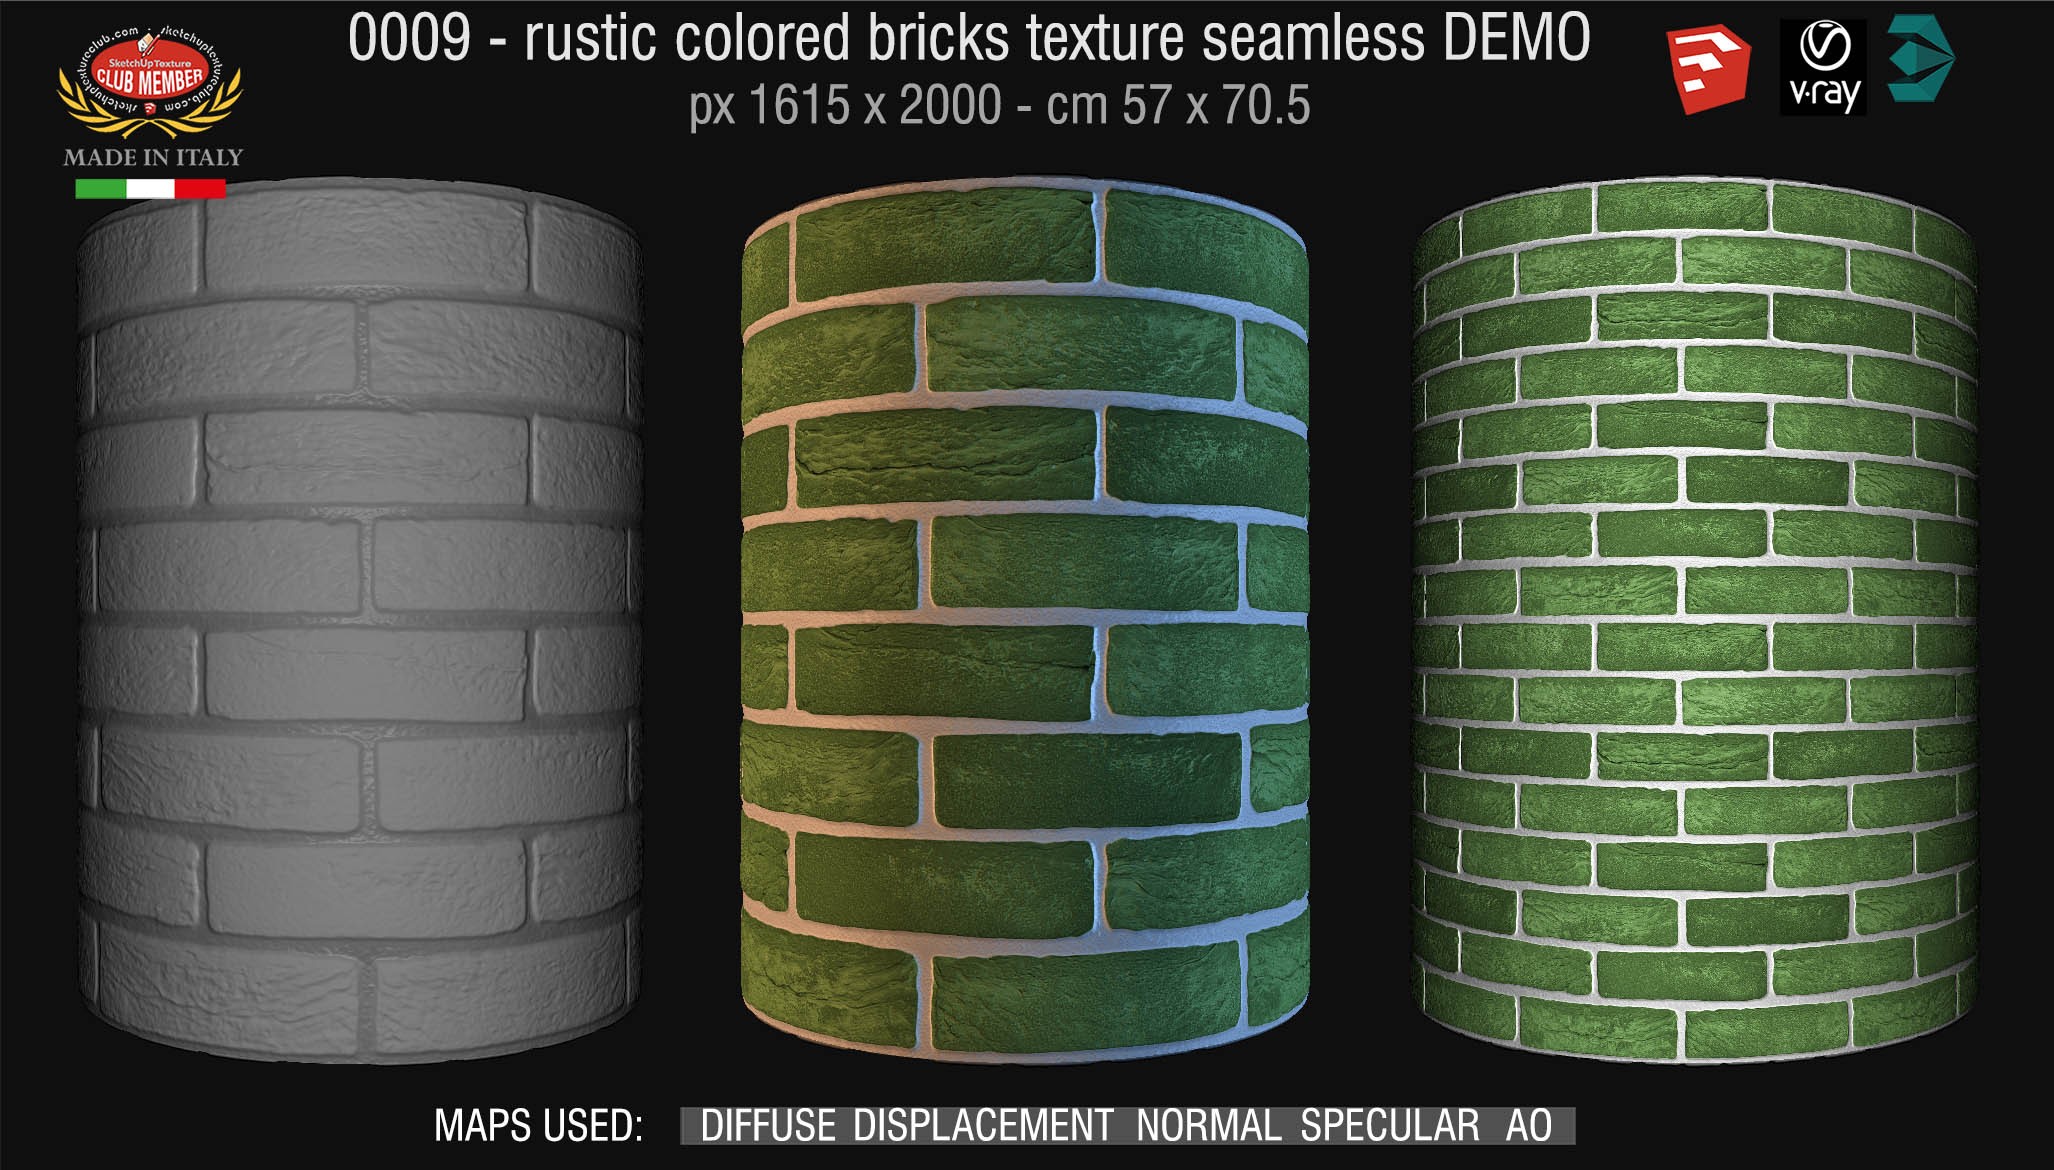 00009 colored rustic bricks texture seamless + maps DEMO